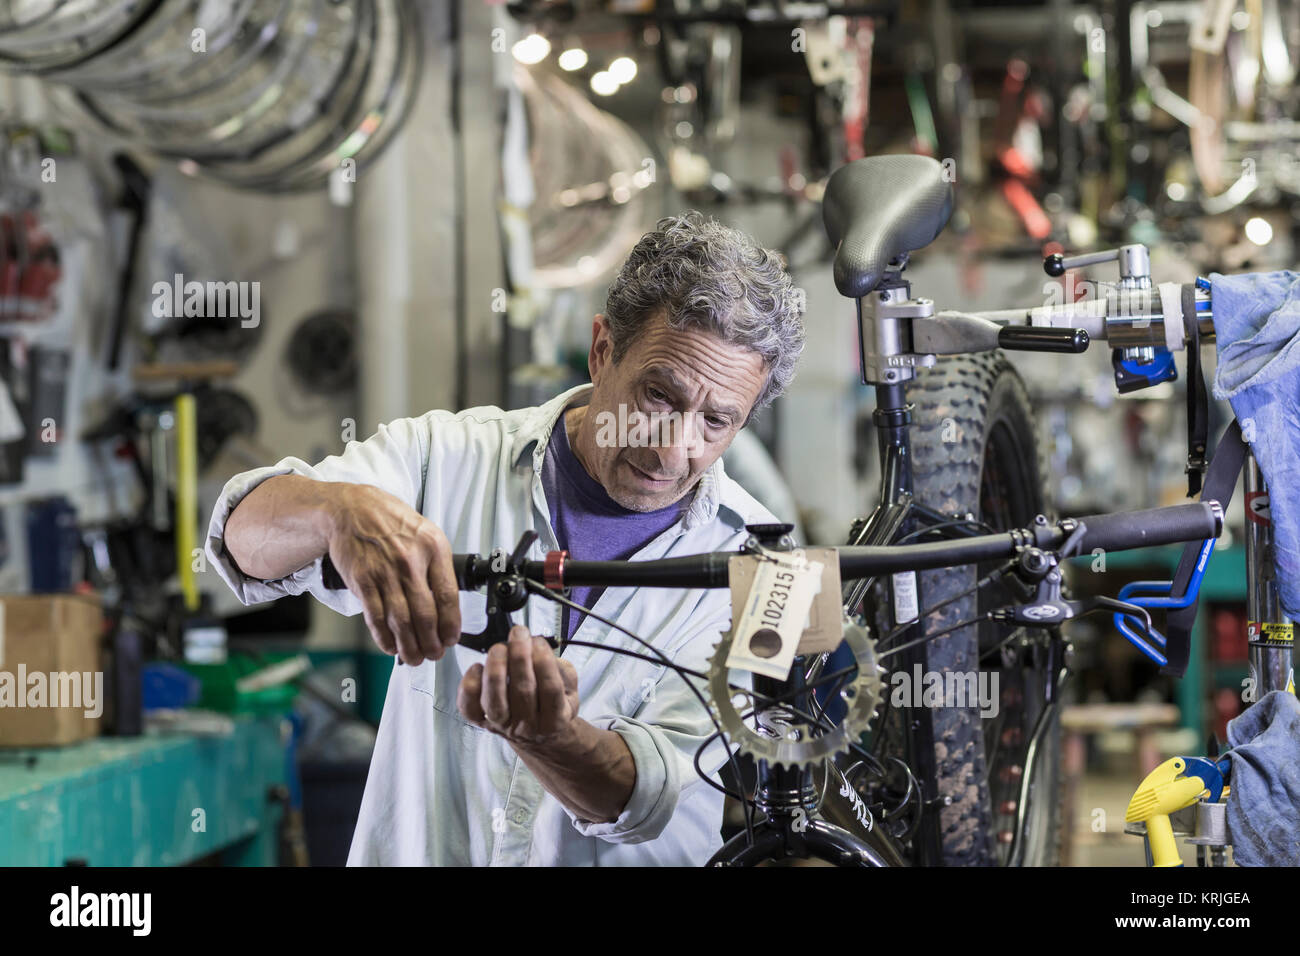 Caucasian man repairing brakes on bicycle Stock Photo